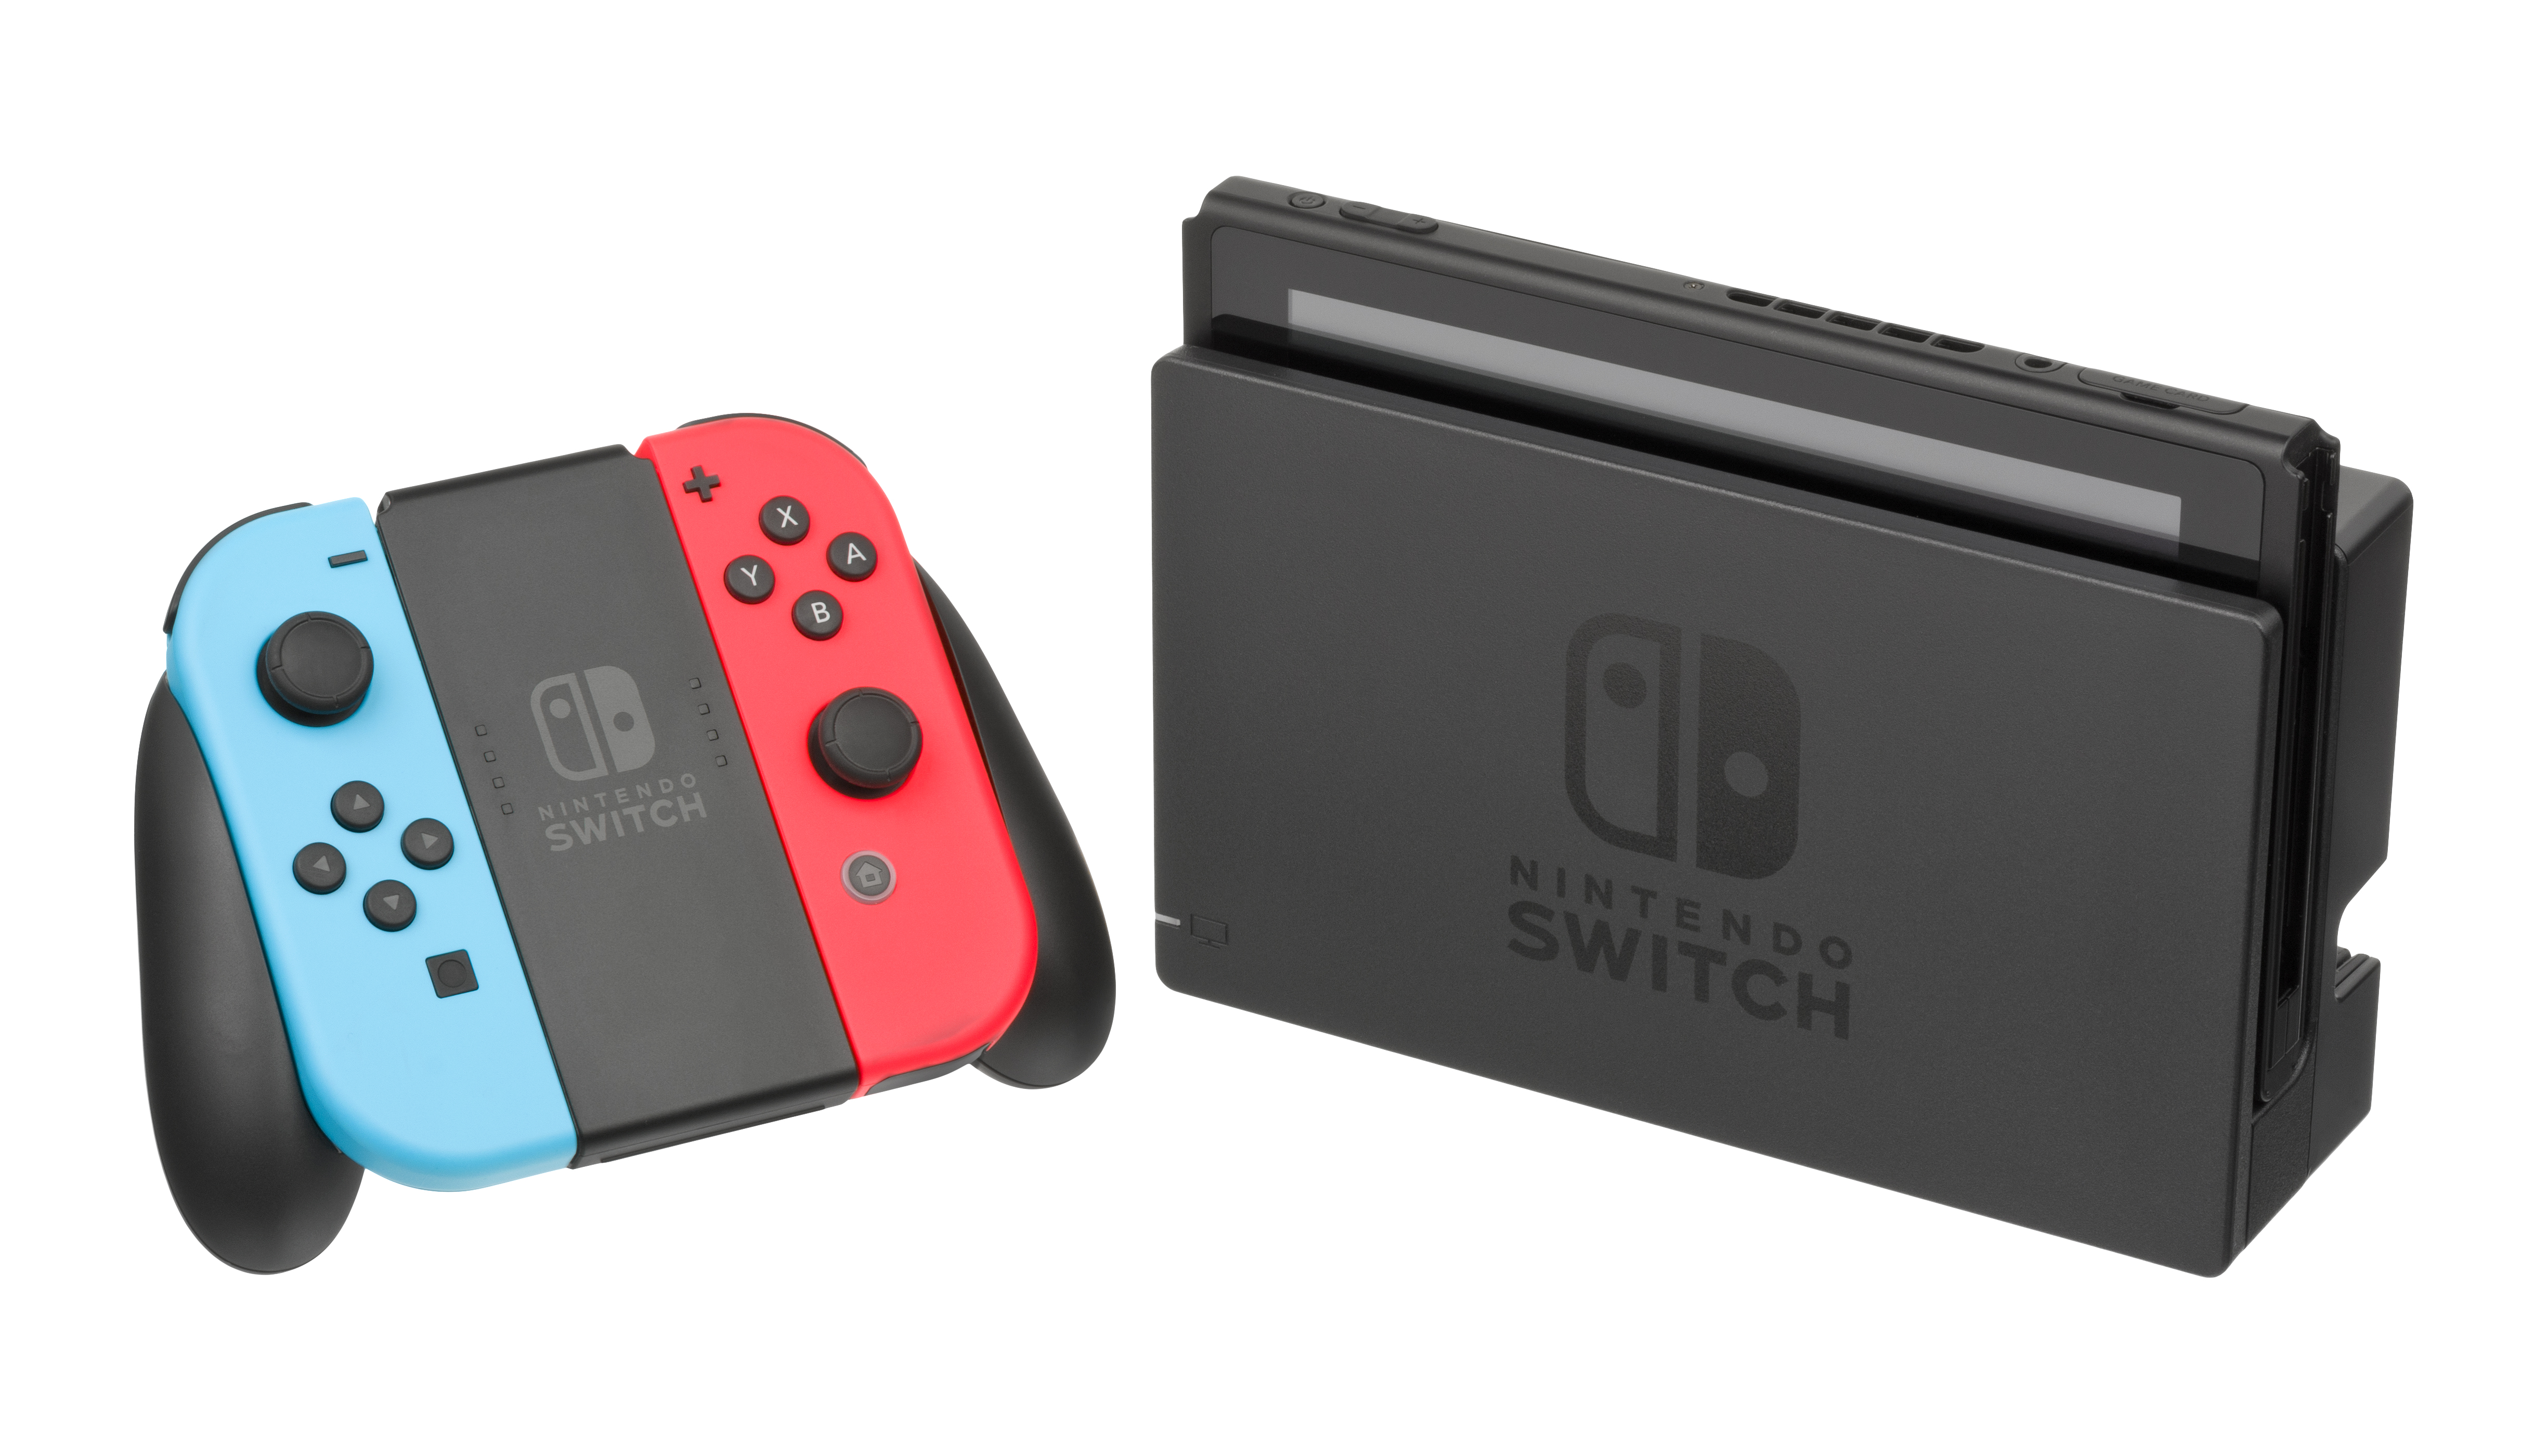 M.M. Soft Thailand เตรียมนำเข้า Nintendo Switch มาจำหน่ายในประเทศไทยอย่างเป็นทางการ และมีการรับประกันตัวเครื่องให้ด้วย 1 ปี!